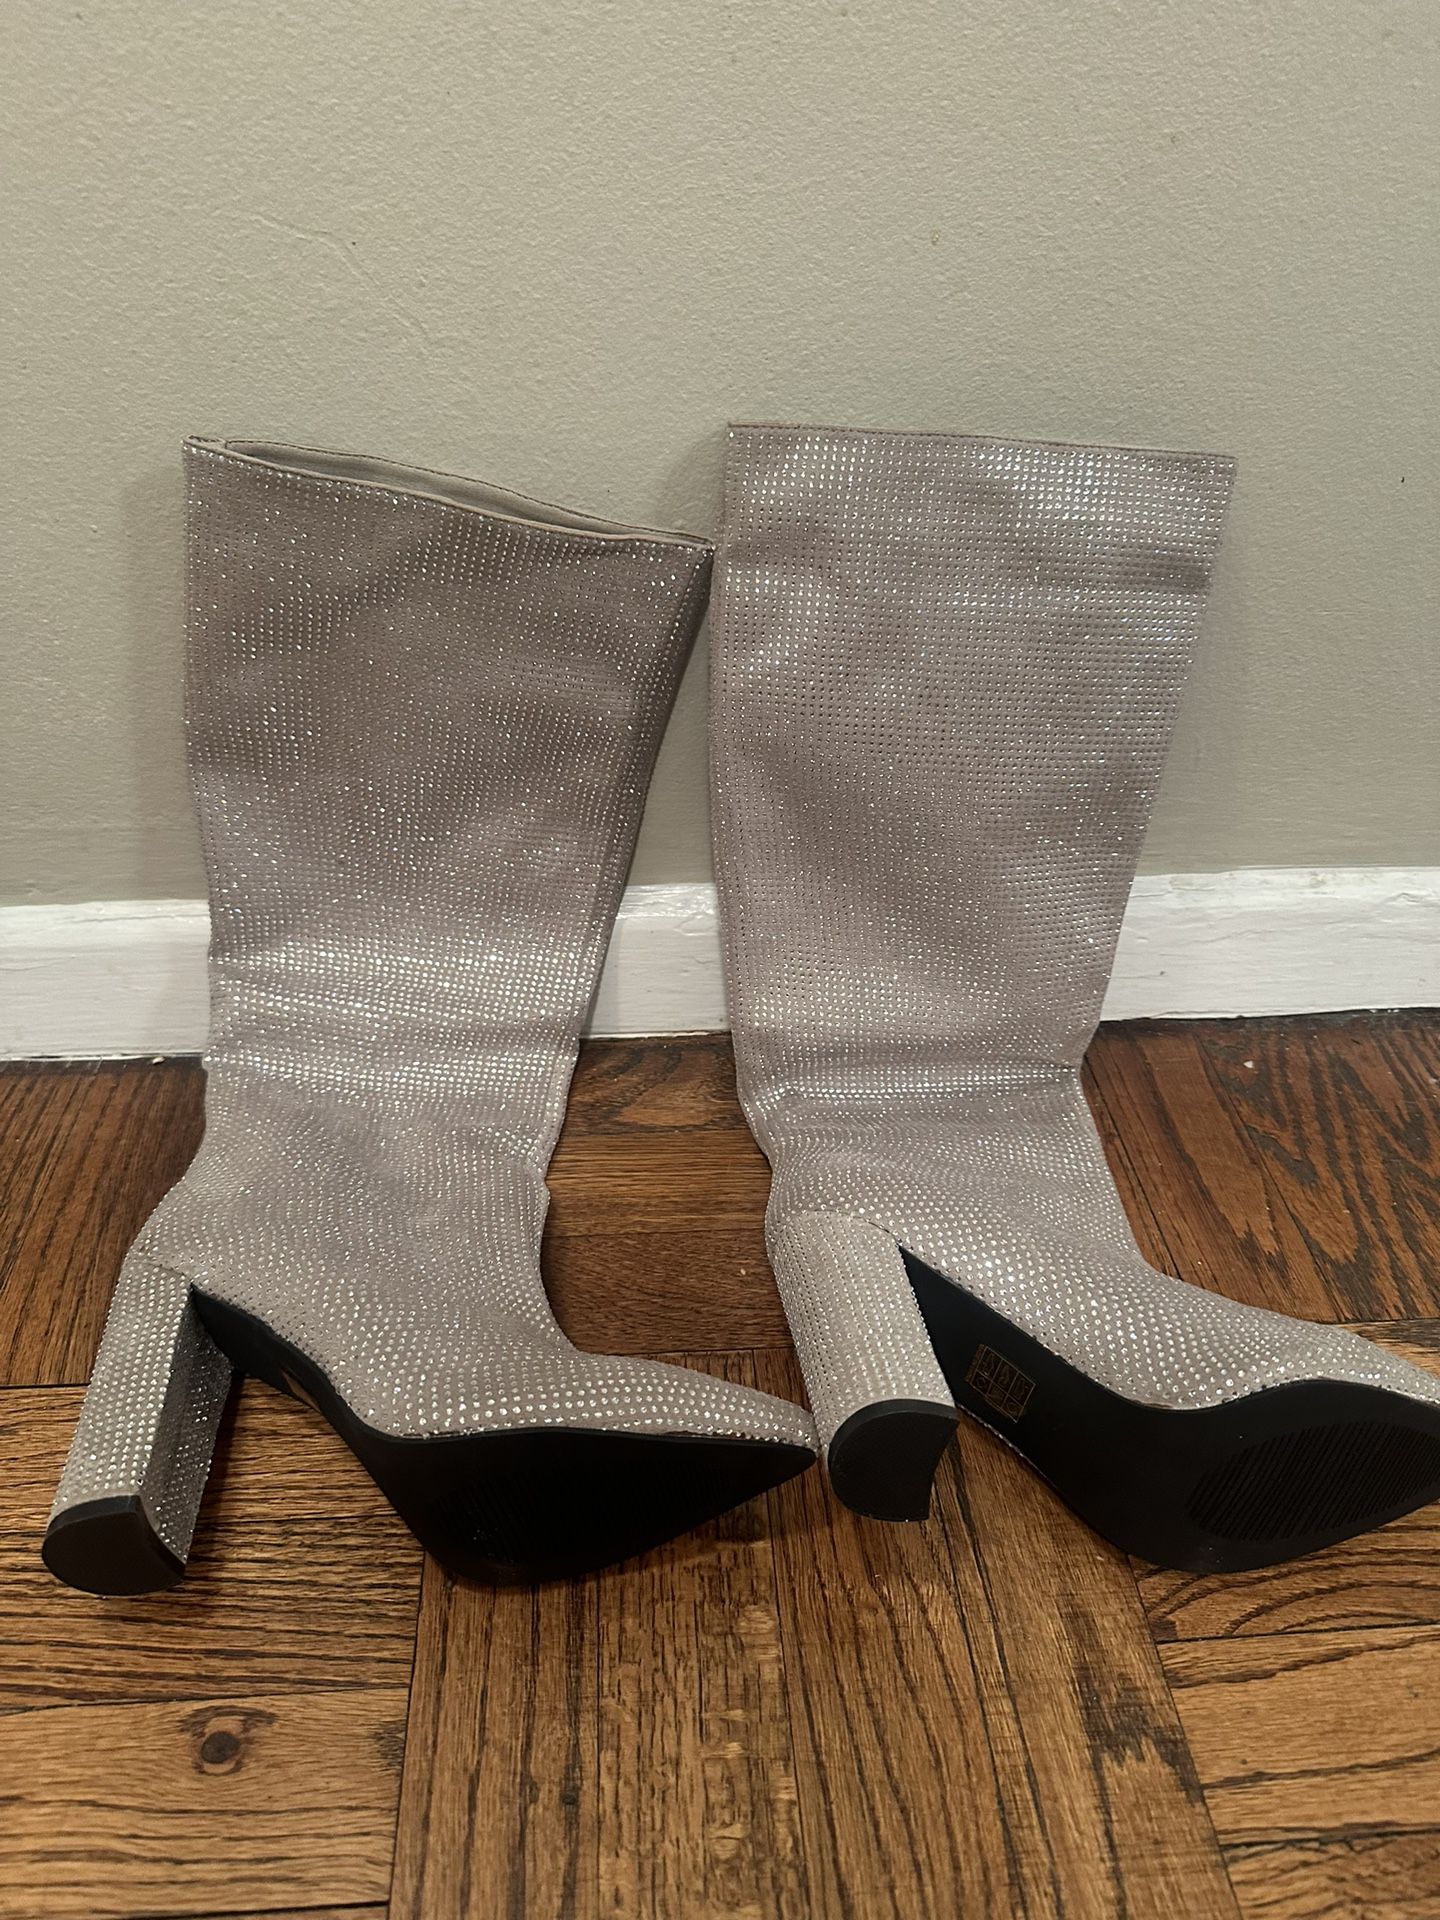 Rhinestone glitter knee high boots - $10